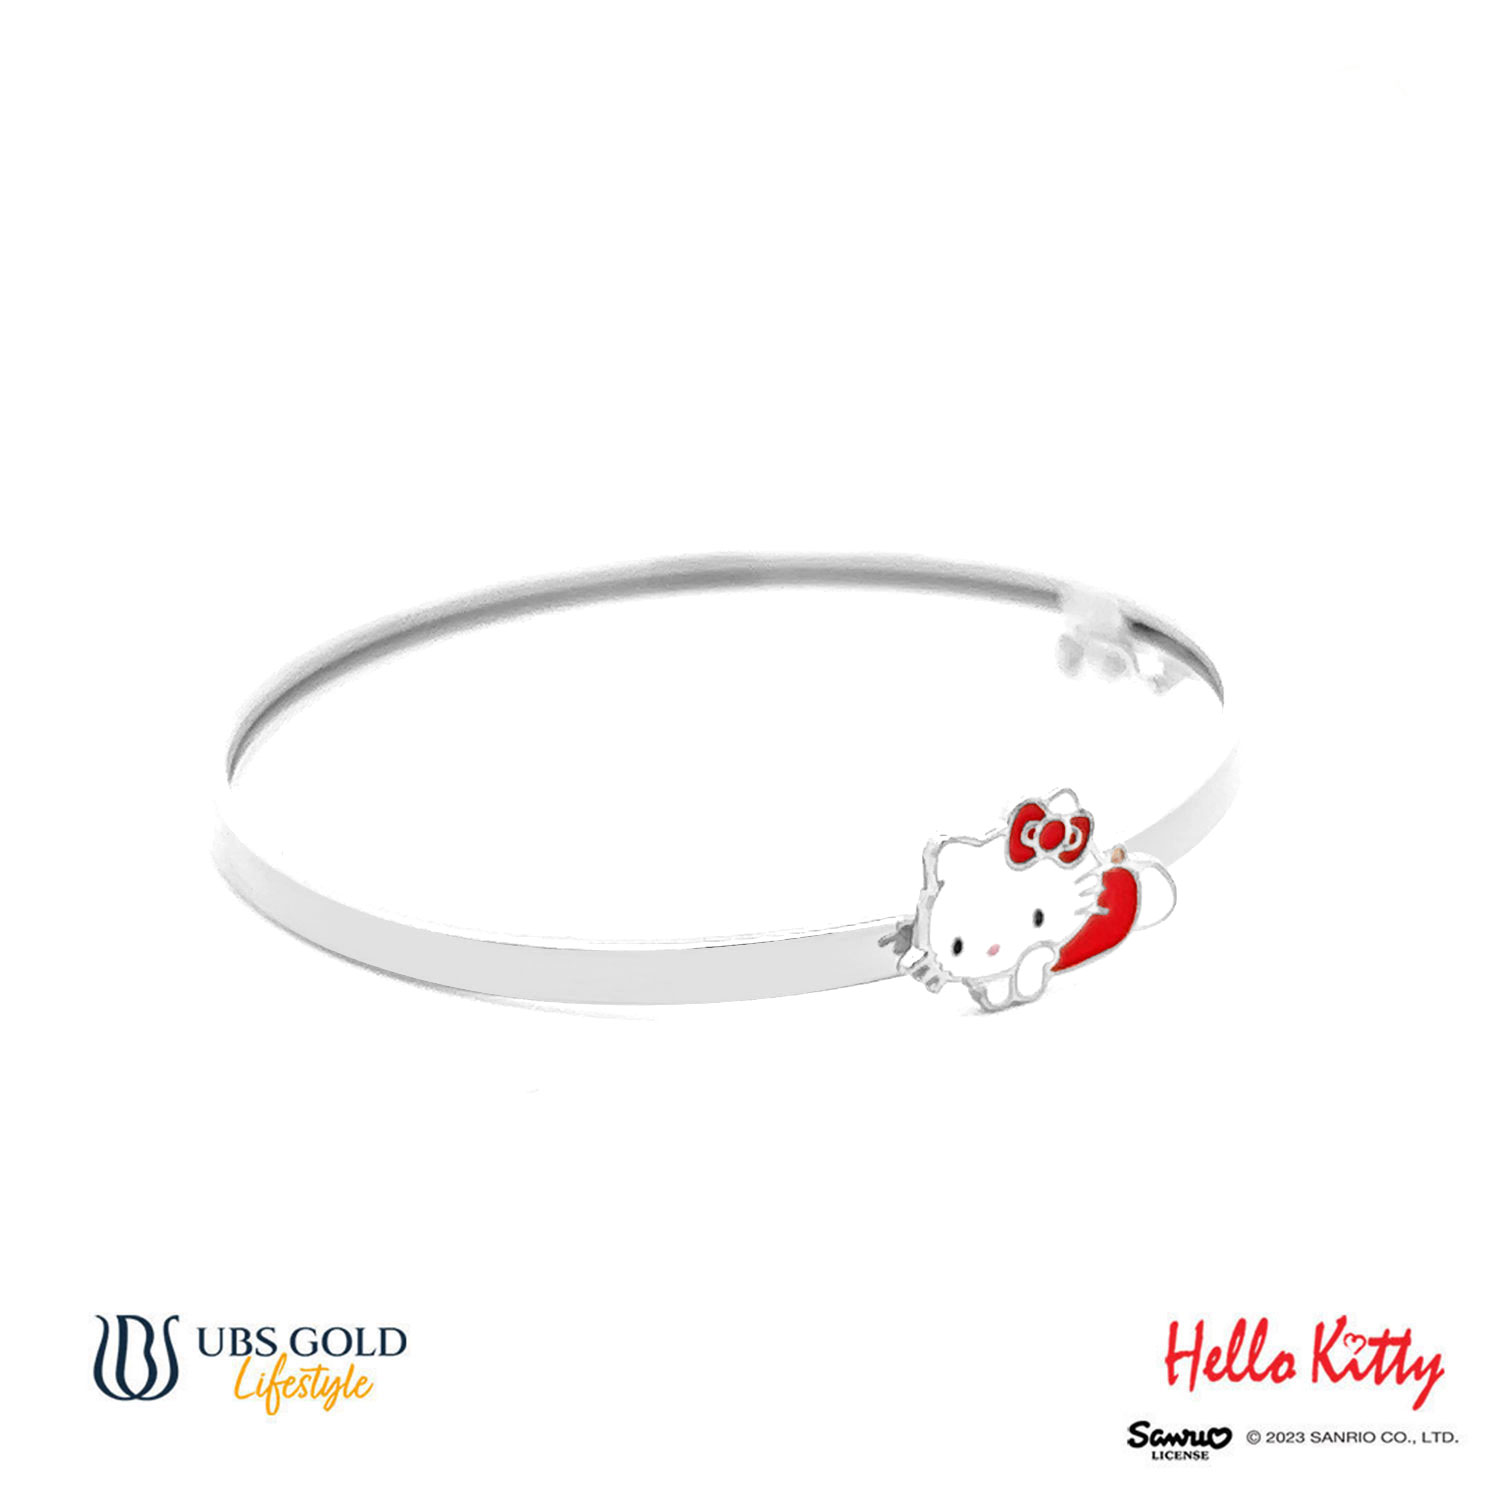 UBS Gold Gelang Emas Bayi Sanrio Hello Kitty - Vgz0046 - 17K